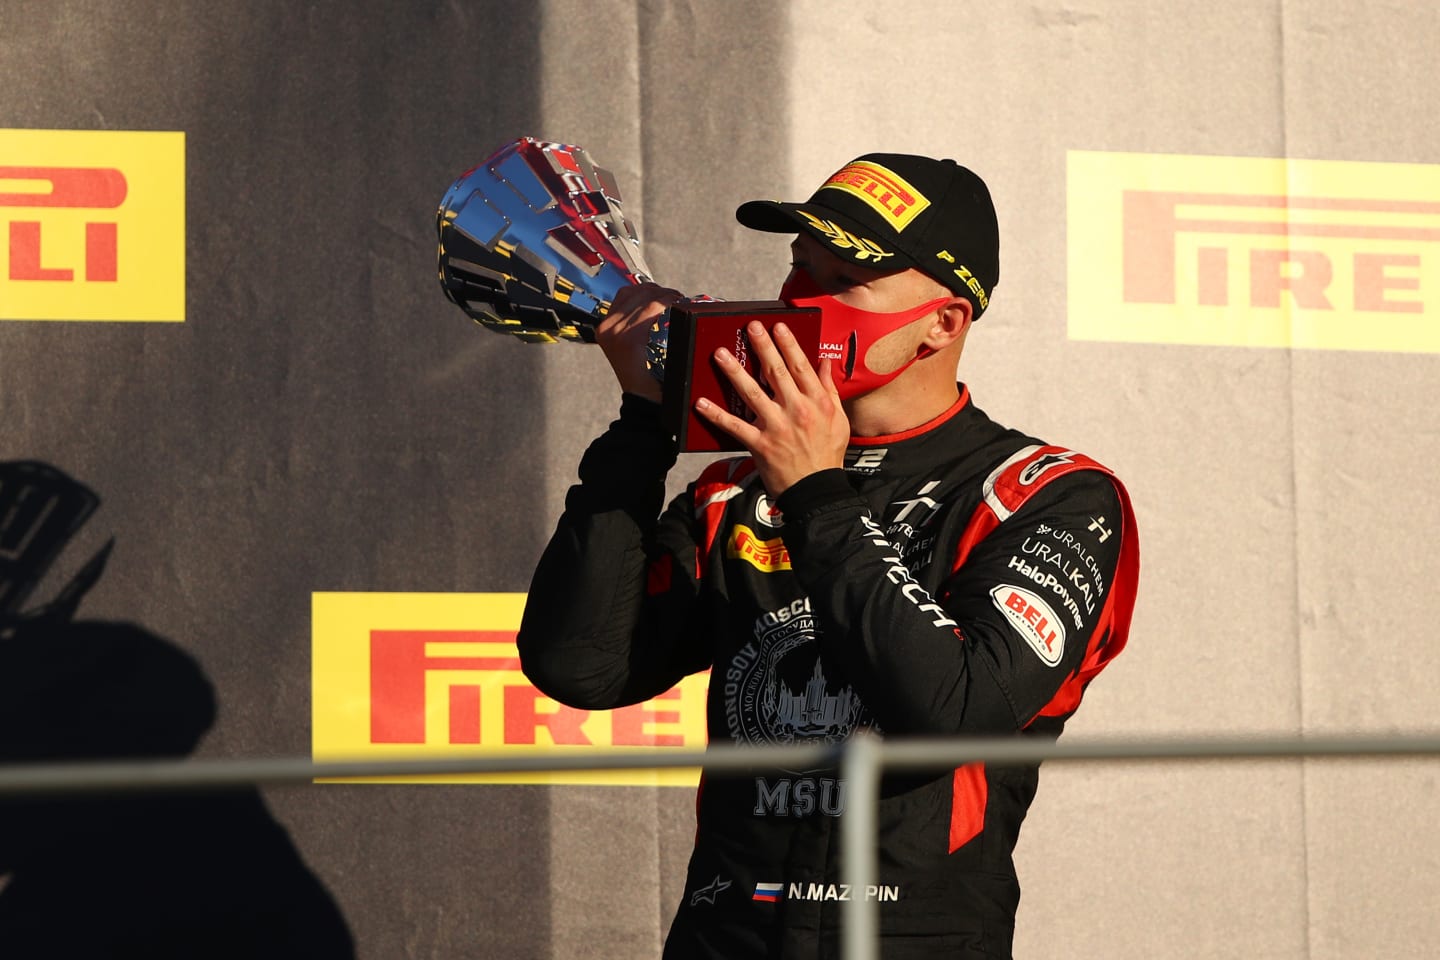 SCARPERIA, ITALY - SEPTEMBER 12: Race winner Nikita Mazepin of Russia and Hitech Grand Prix